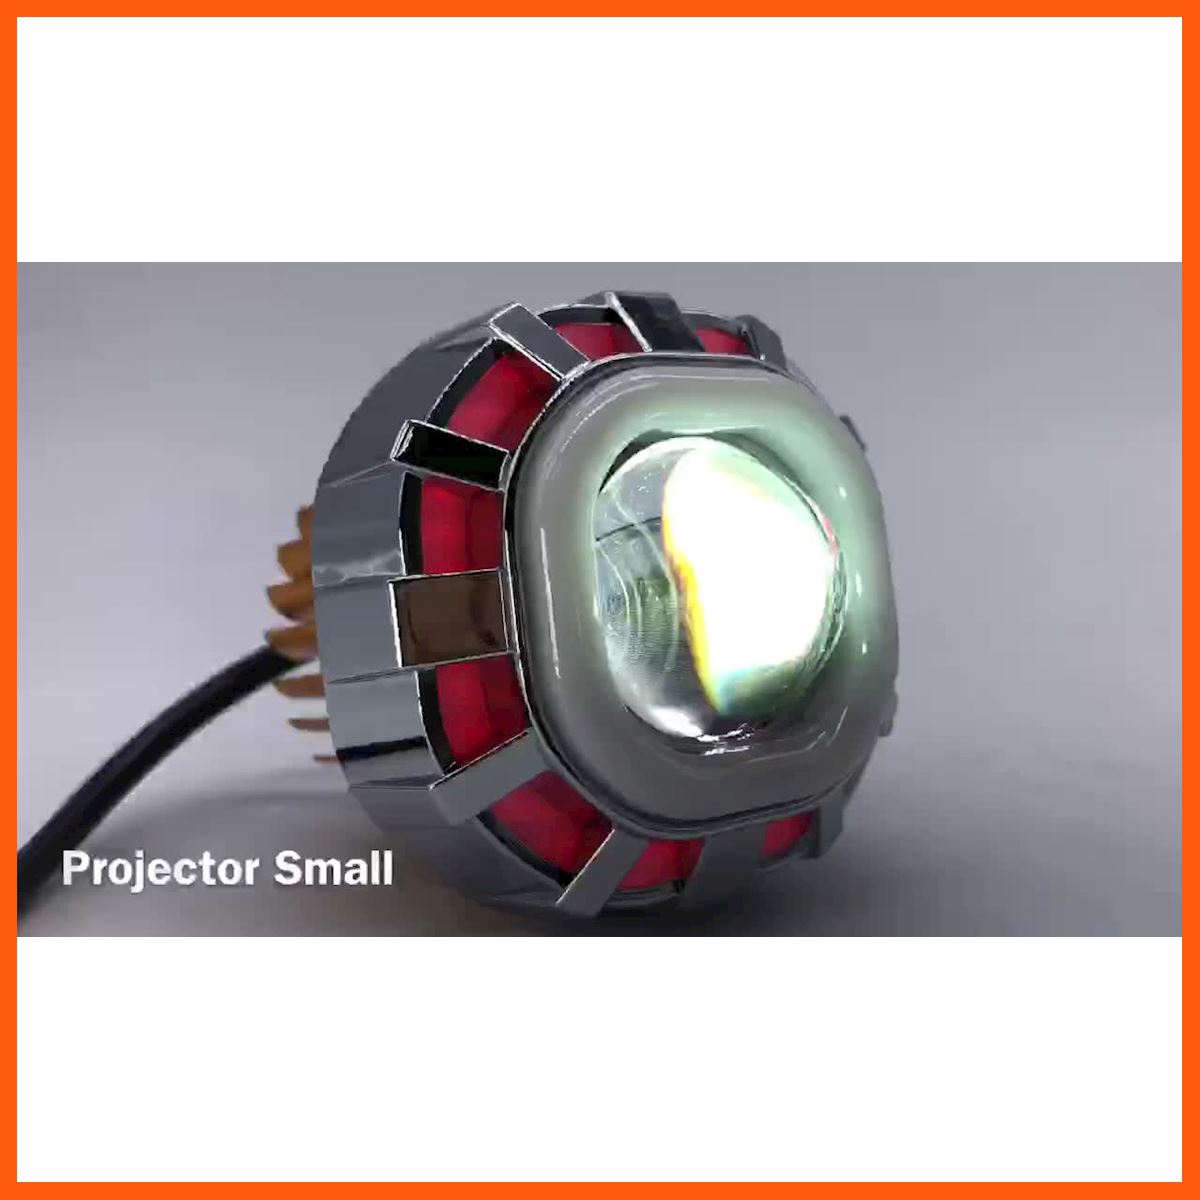 Best Quality หลอดแต่งโปรเจคเตอร์ Projector Ring Light (ตัวเล็ก) 7x7 CM อะไหล่รถยนต์ Auto parts กระบอกโช๊ค Shock cylinder ชุดน็อตรถยนต์ Car nut set ไส้ กรอง Filter อุปกรณ์รถยนต์ Car accessories